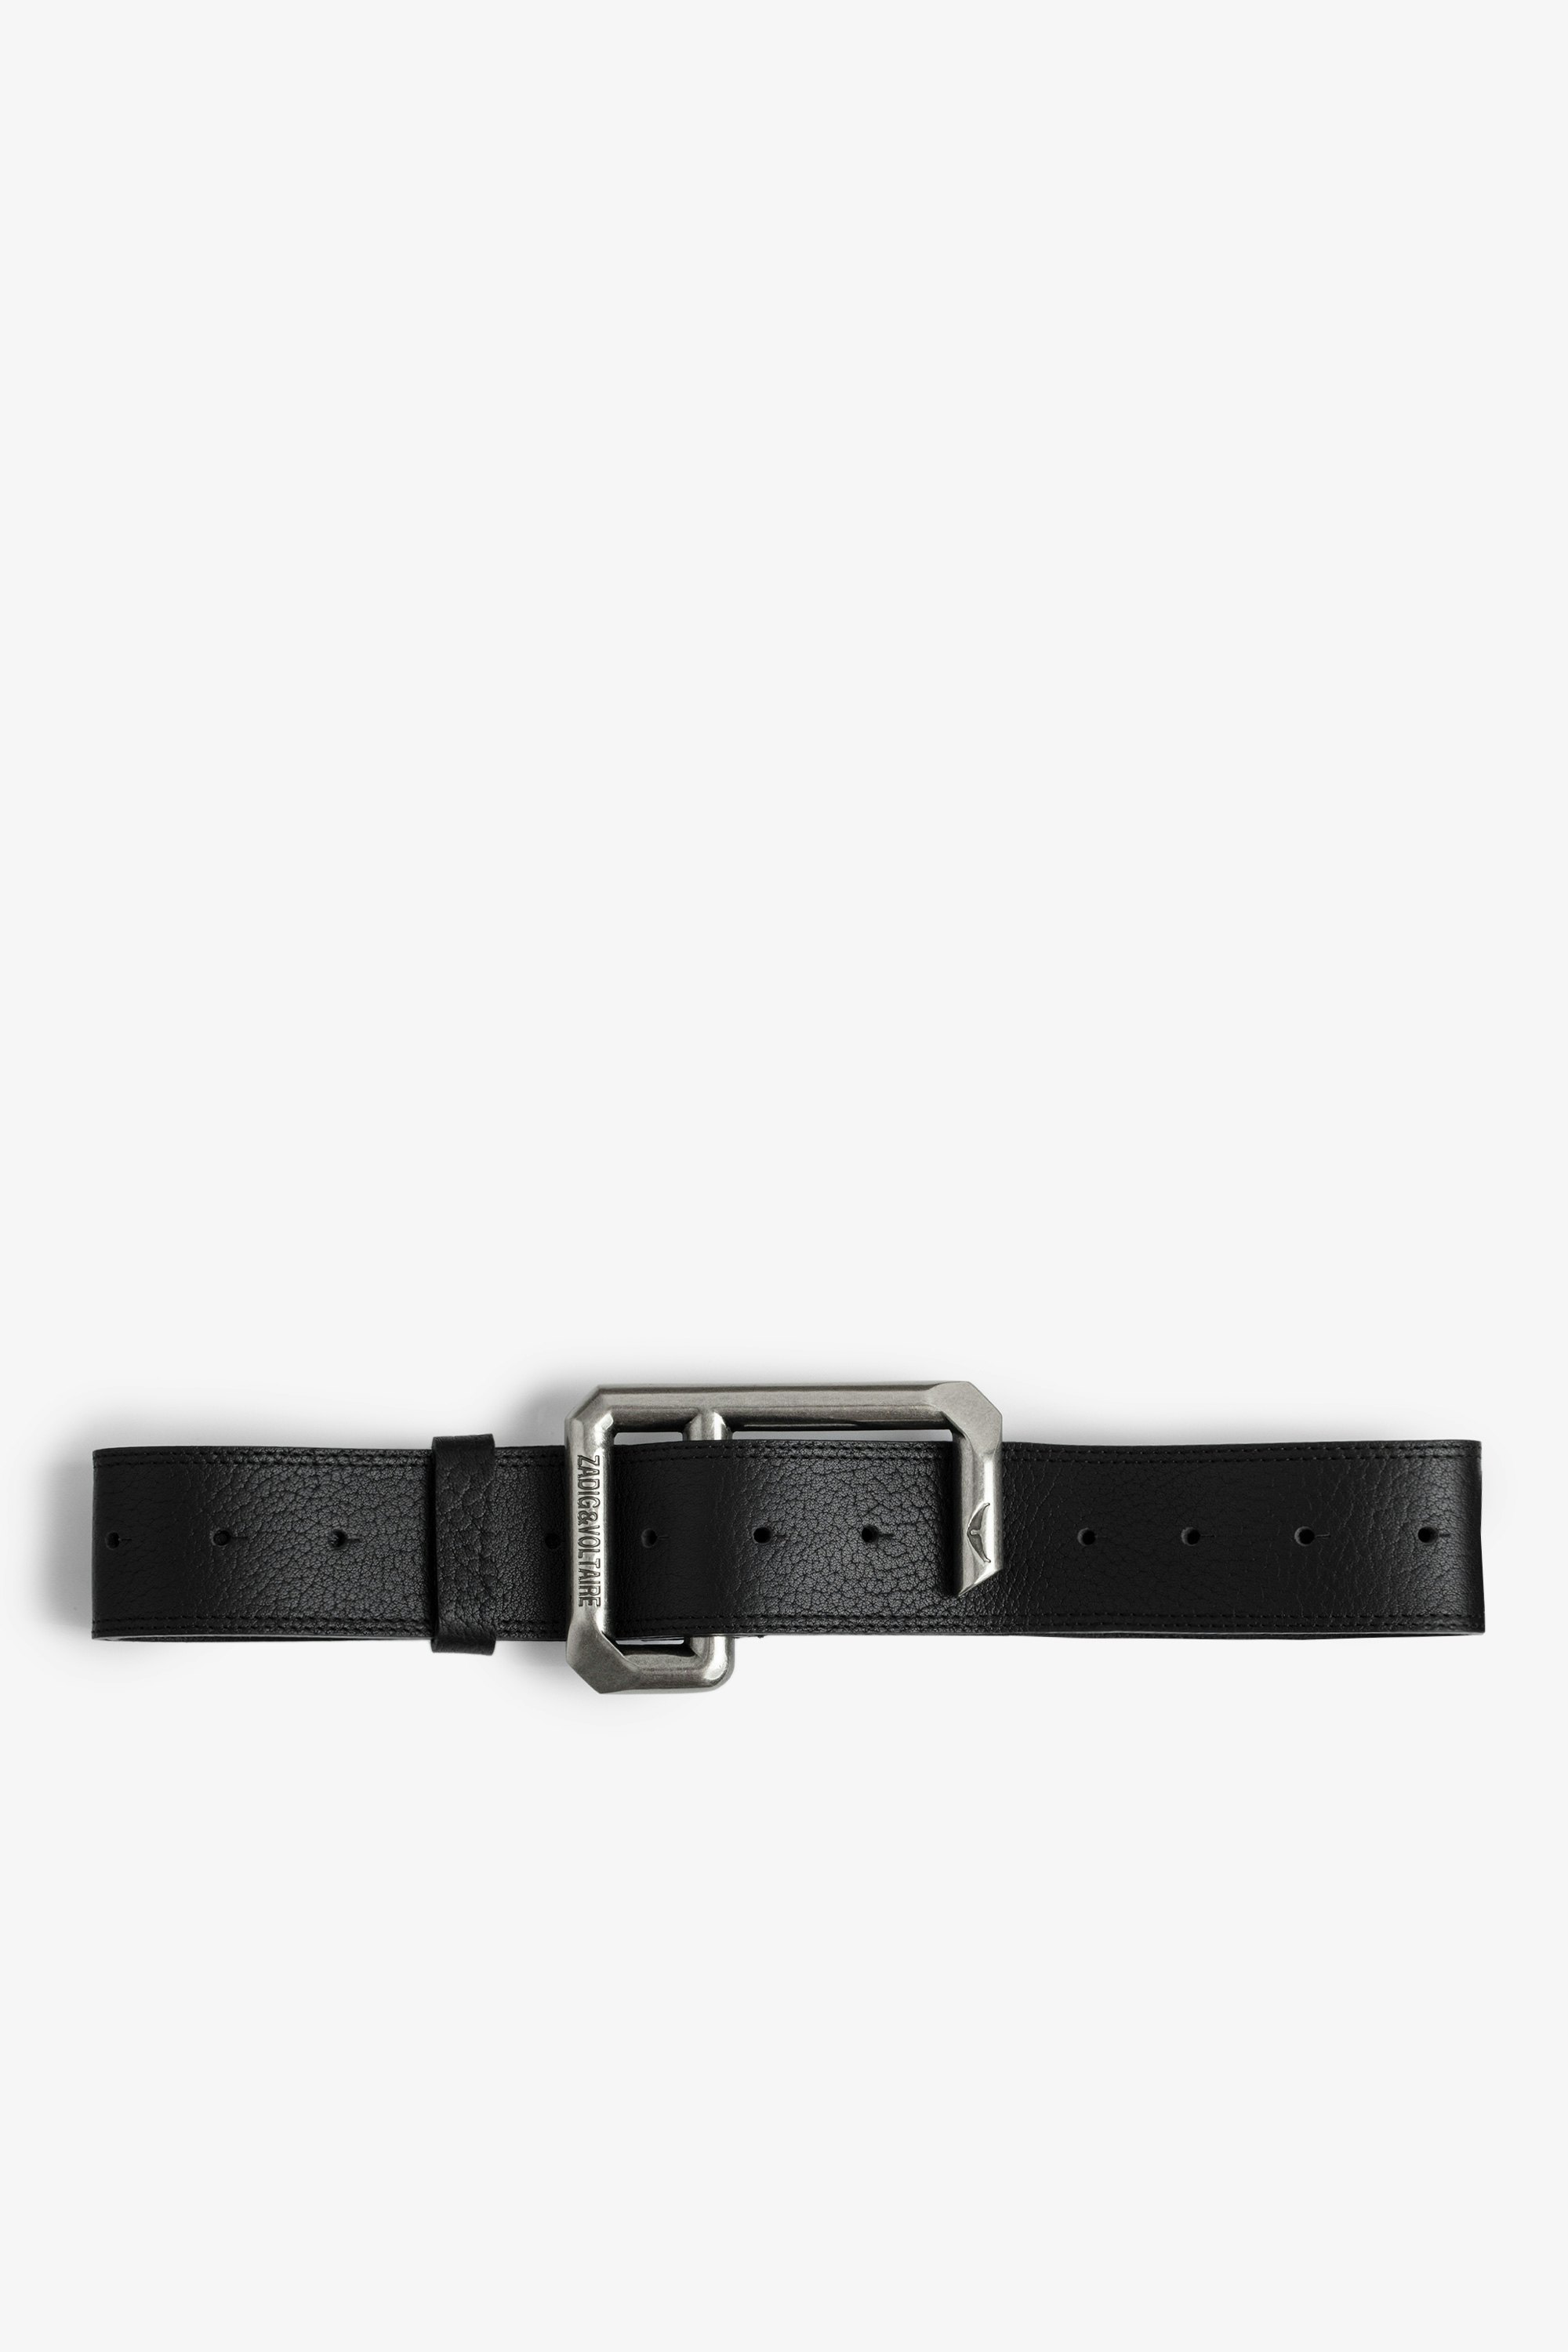 La Cecilia 50 mm Belt Women's adjustable black leather belt with C-shaped buckle